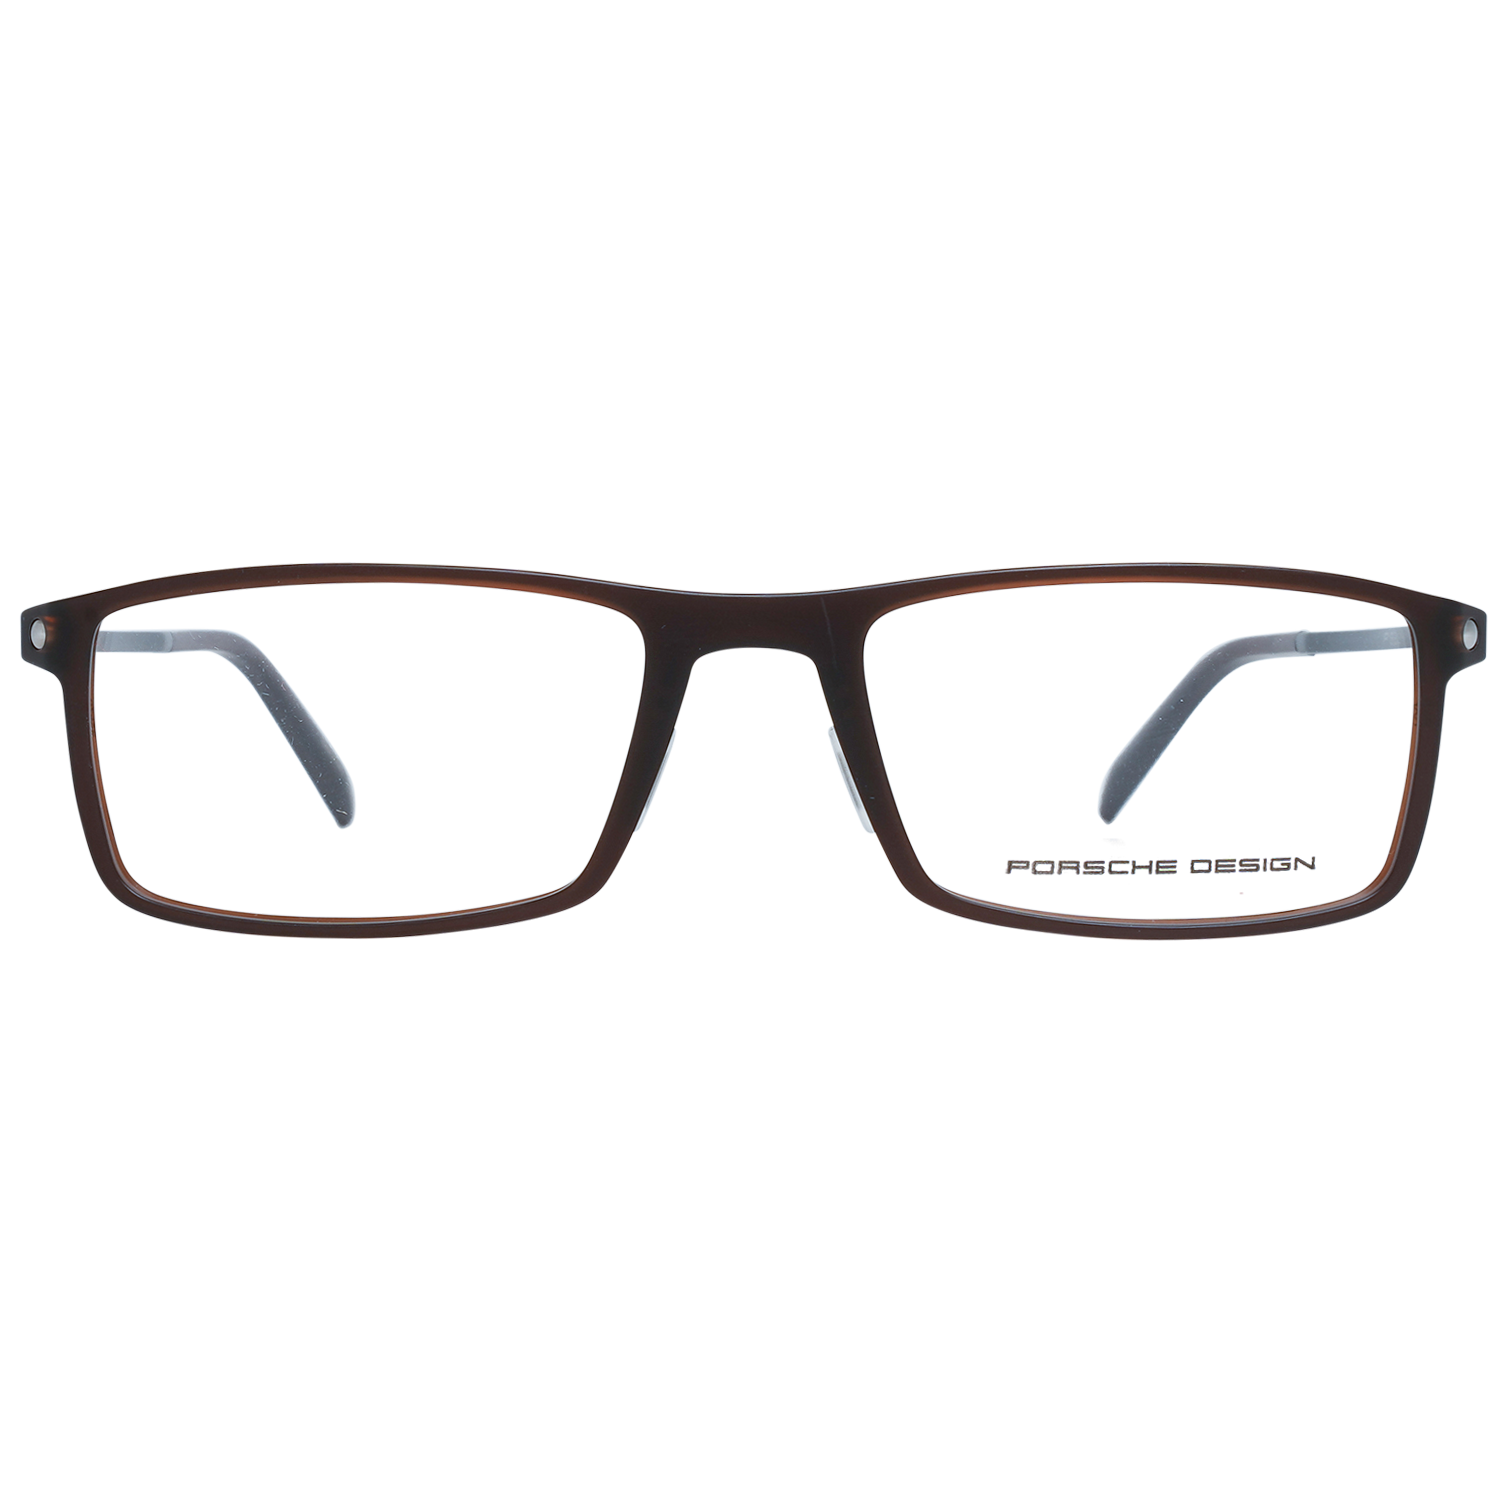 Porsche Design Eyeglasses Porsche Design Glasses Frames P8384 D 55 Eyeglasses Eyewear UK USA Australia 